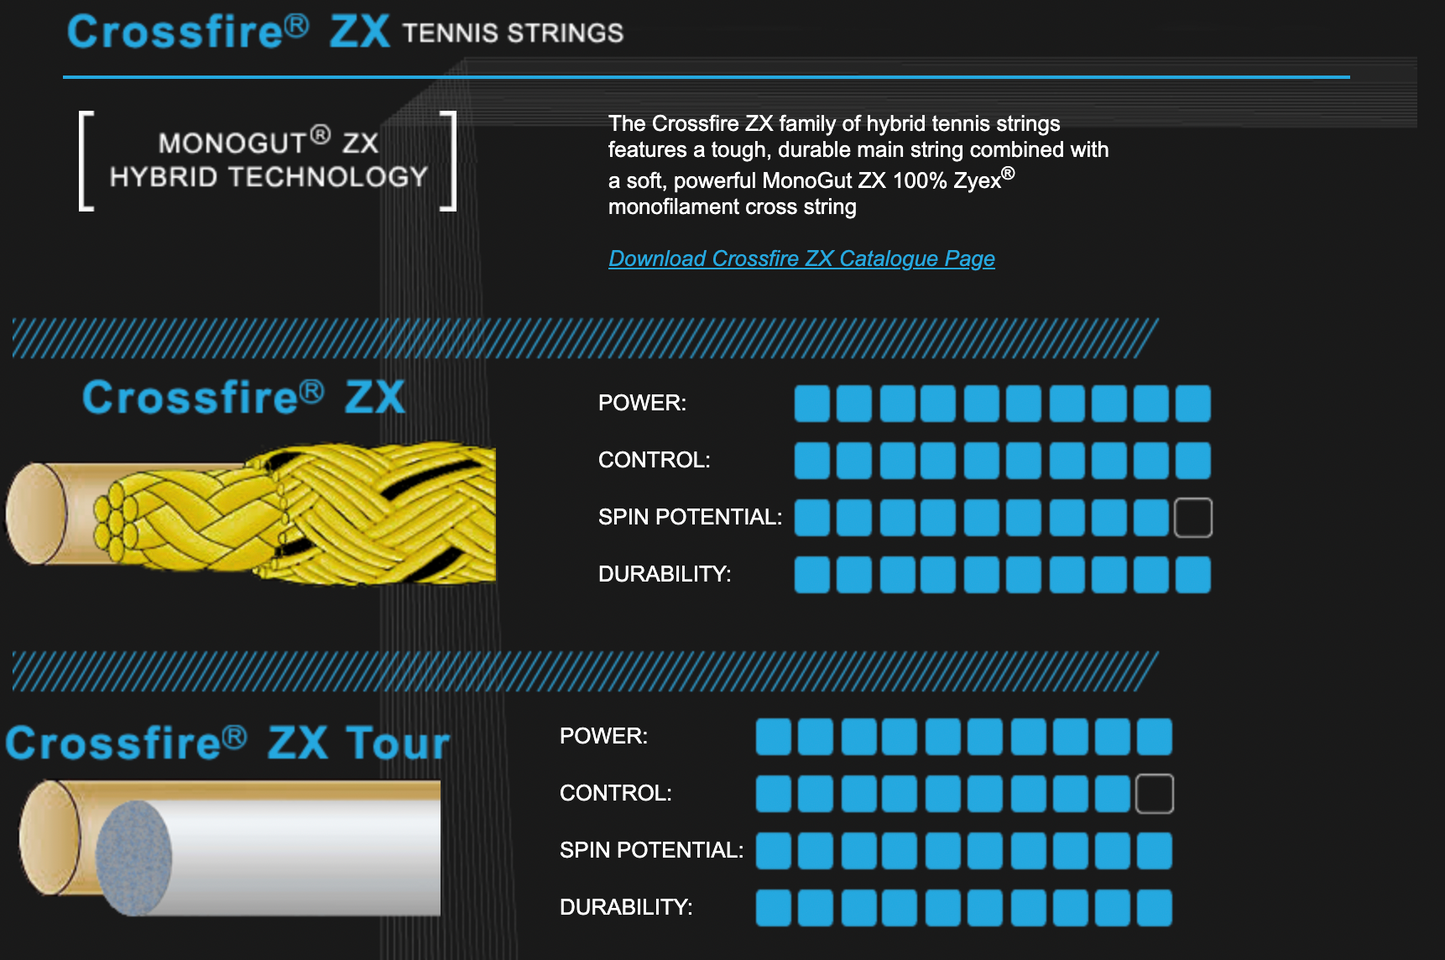 CROSSFIRE PLUS 23'x20' Tennis String Set